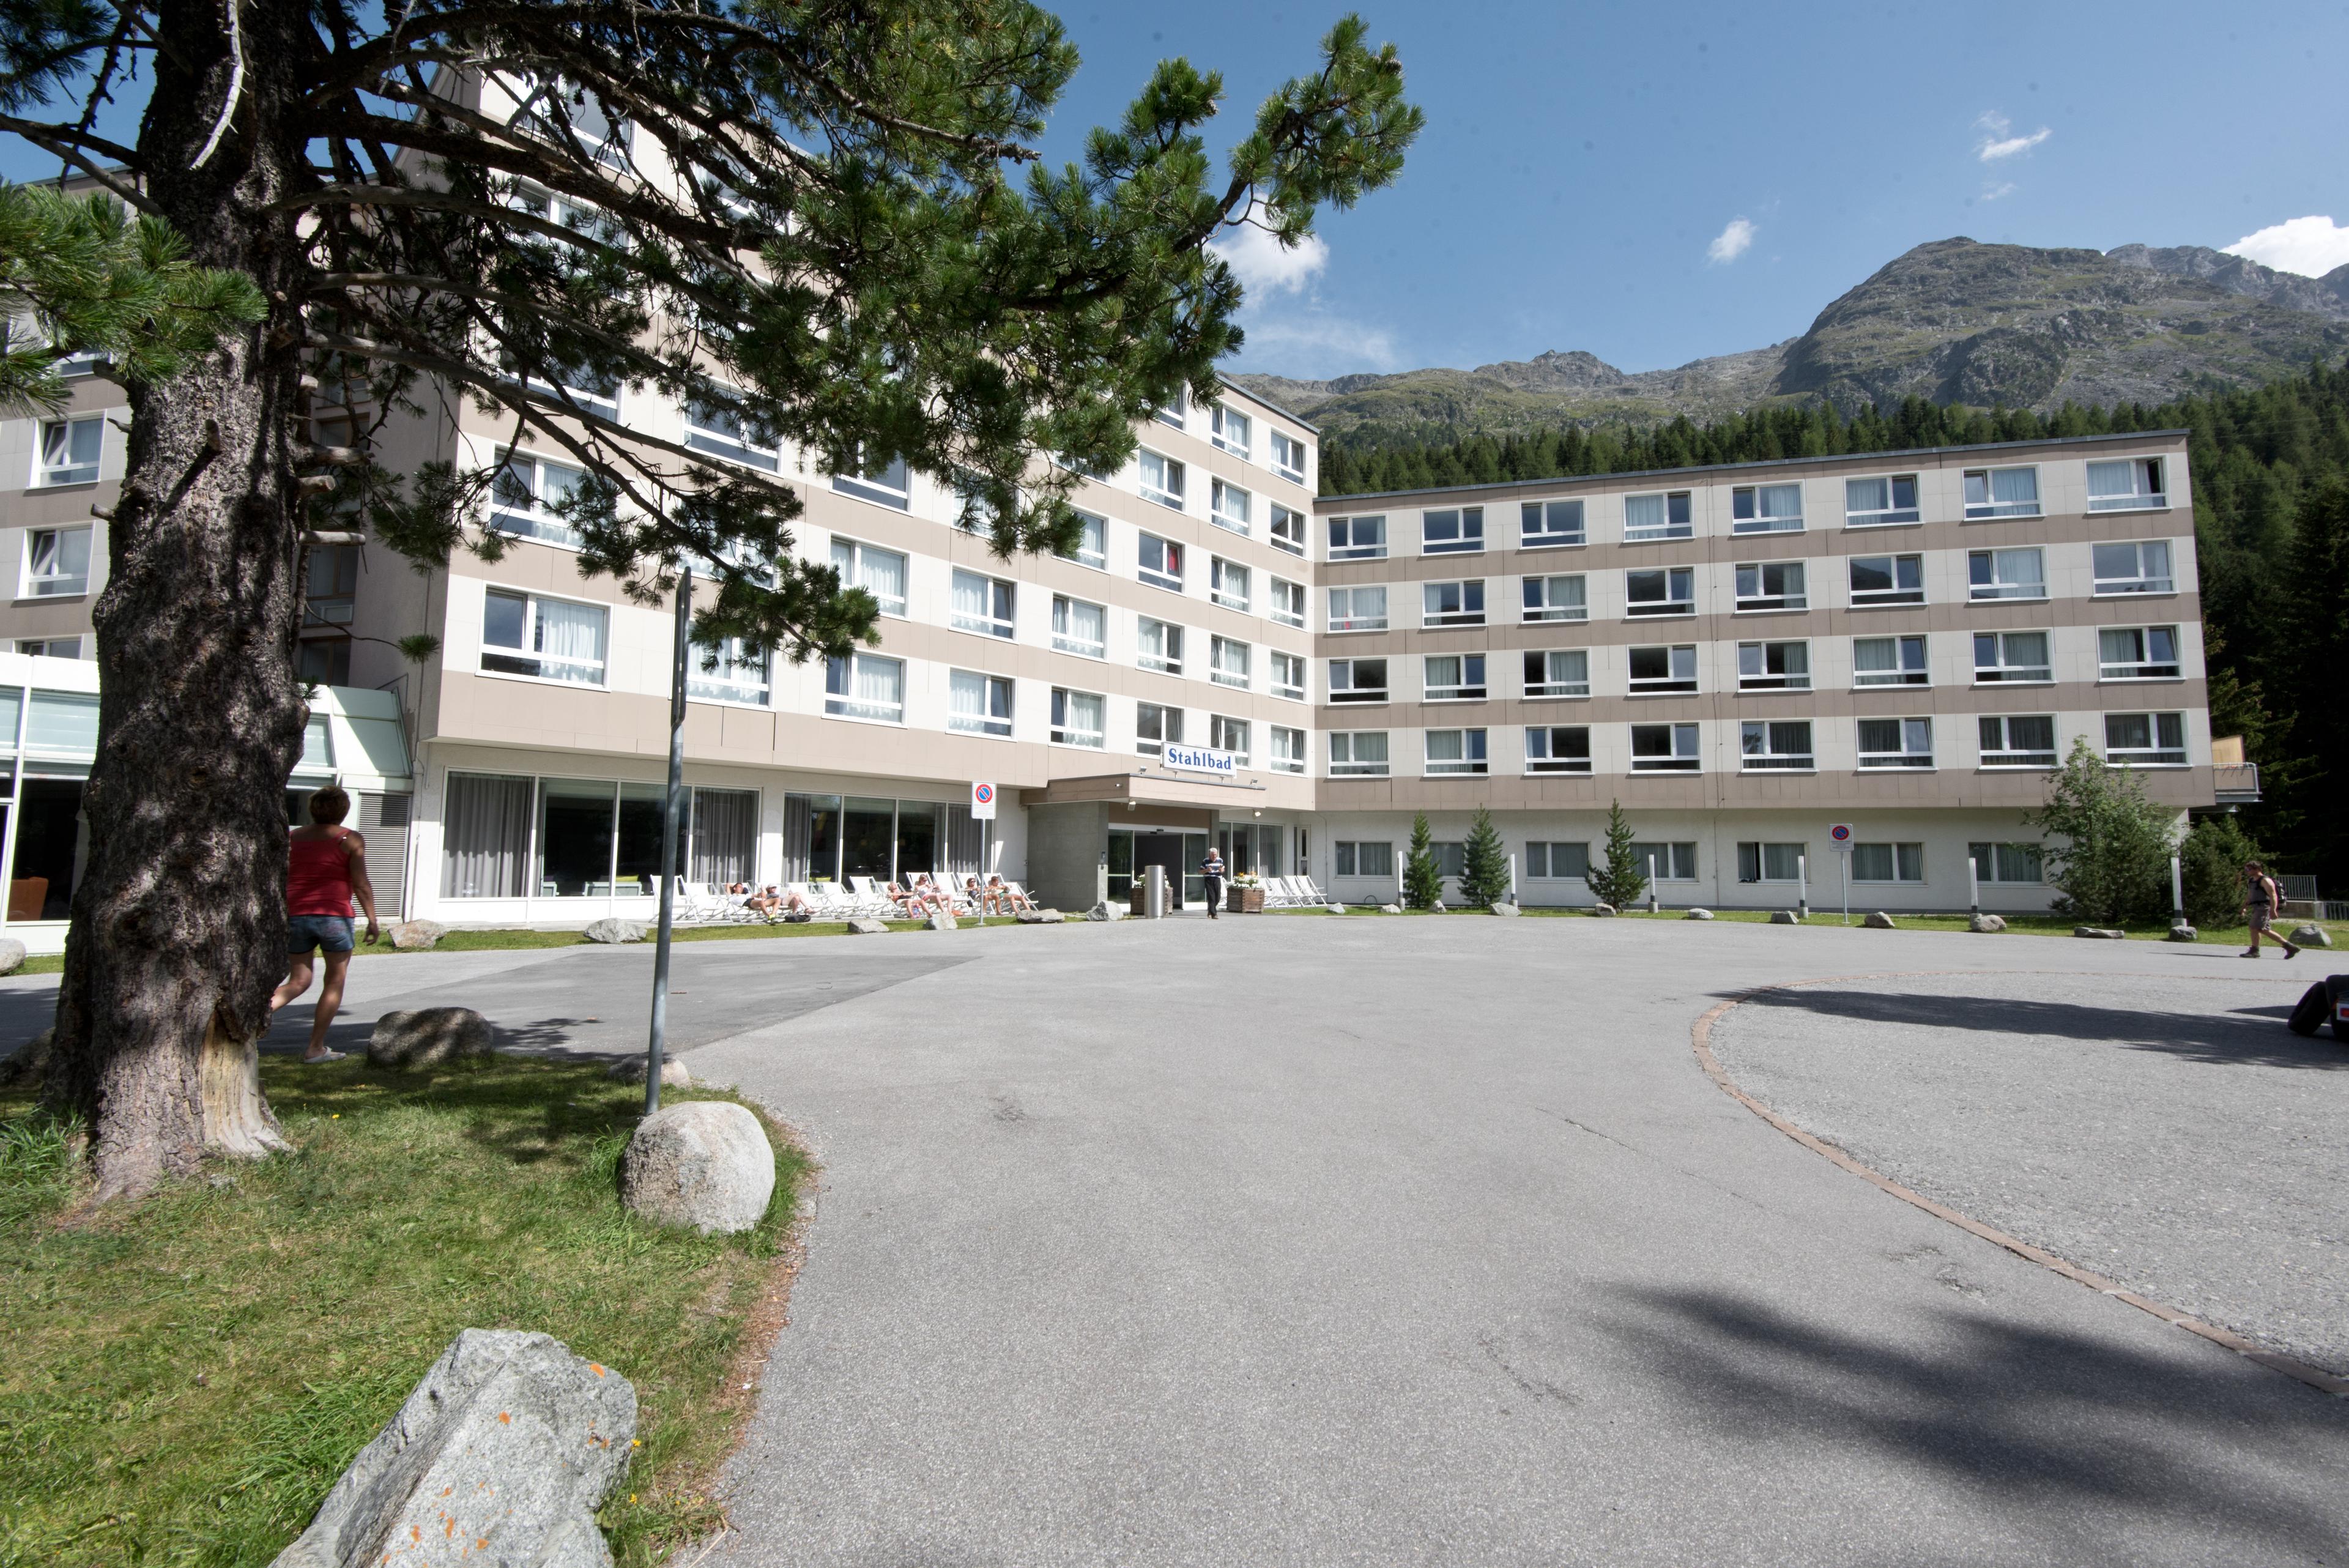 Hotel Stahlbad in St. Moritz, Zwitserland.